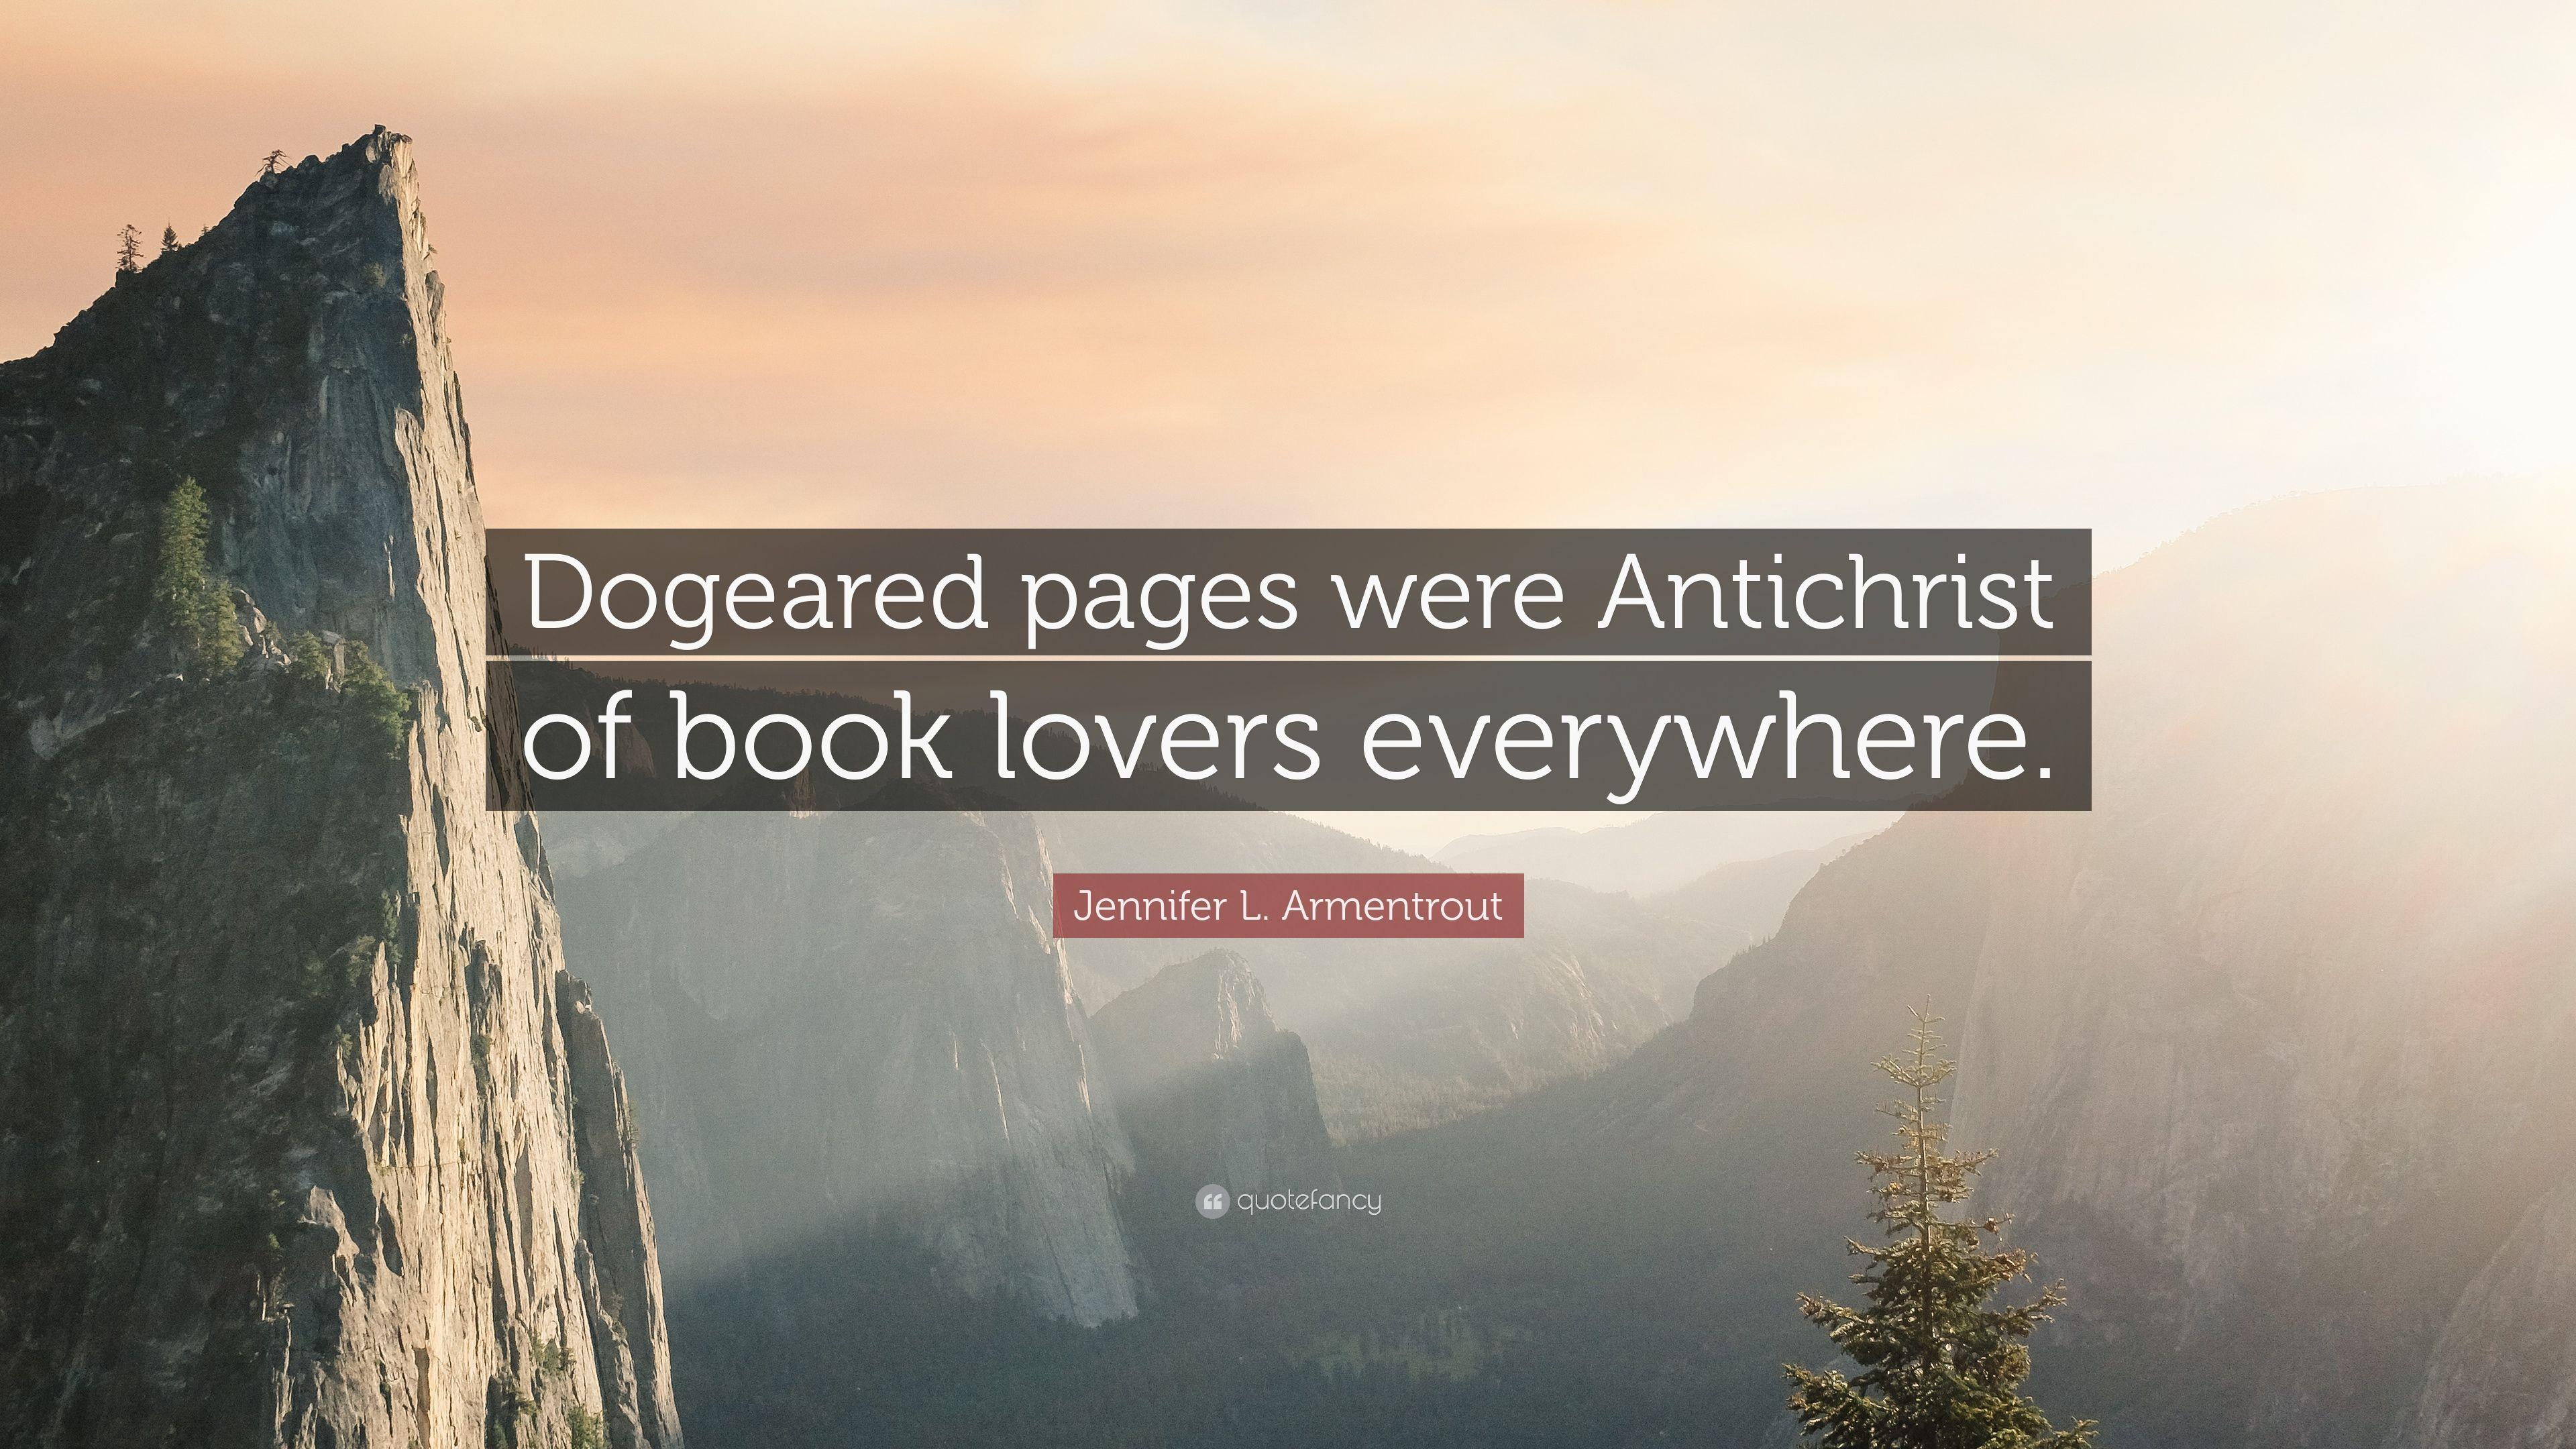 Jennifer L. Armentrout Quote: “Dogeared pages were Antichrist